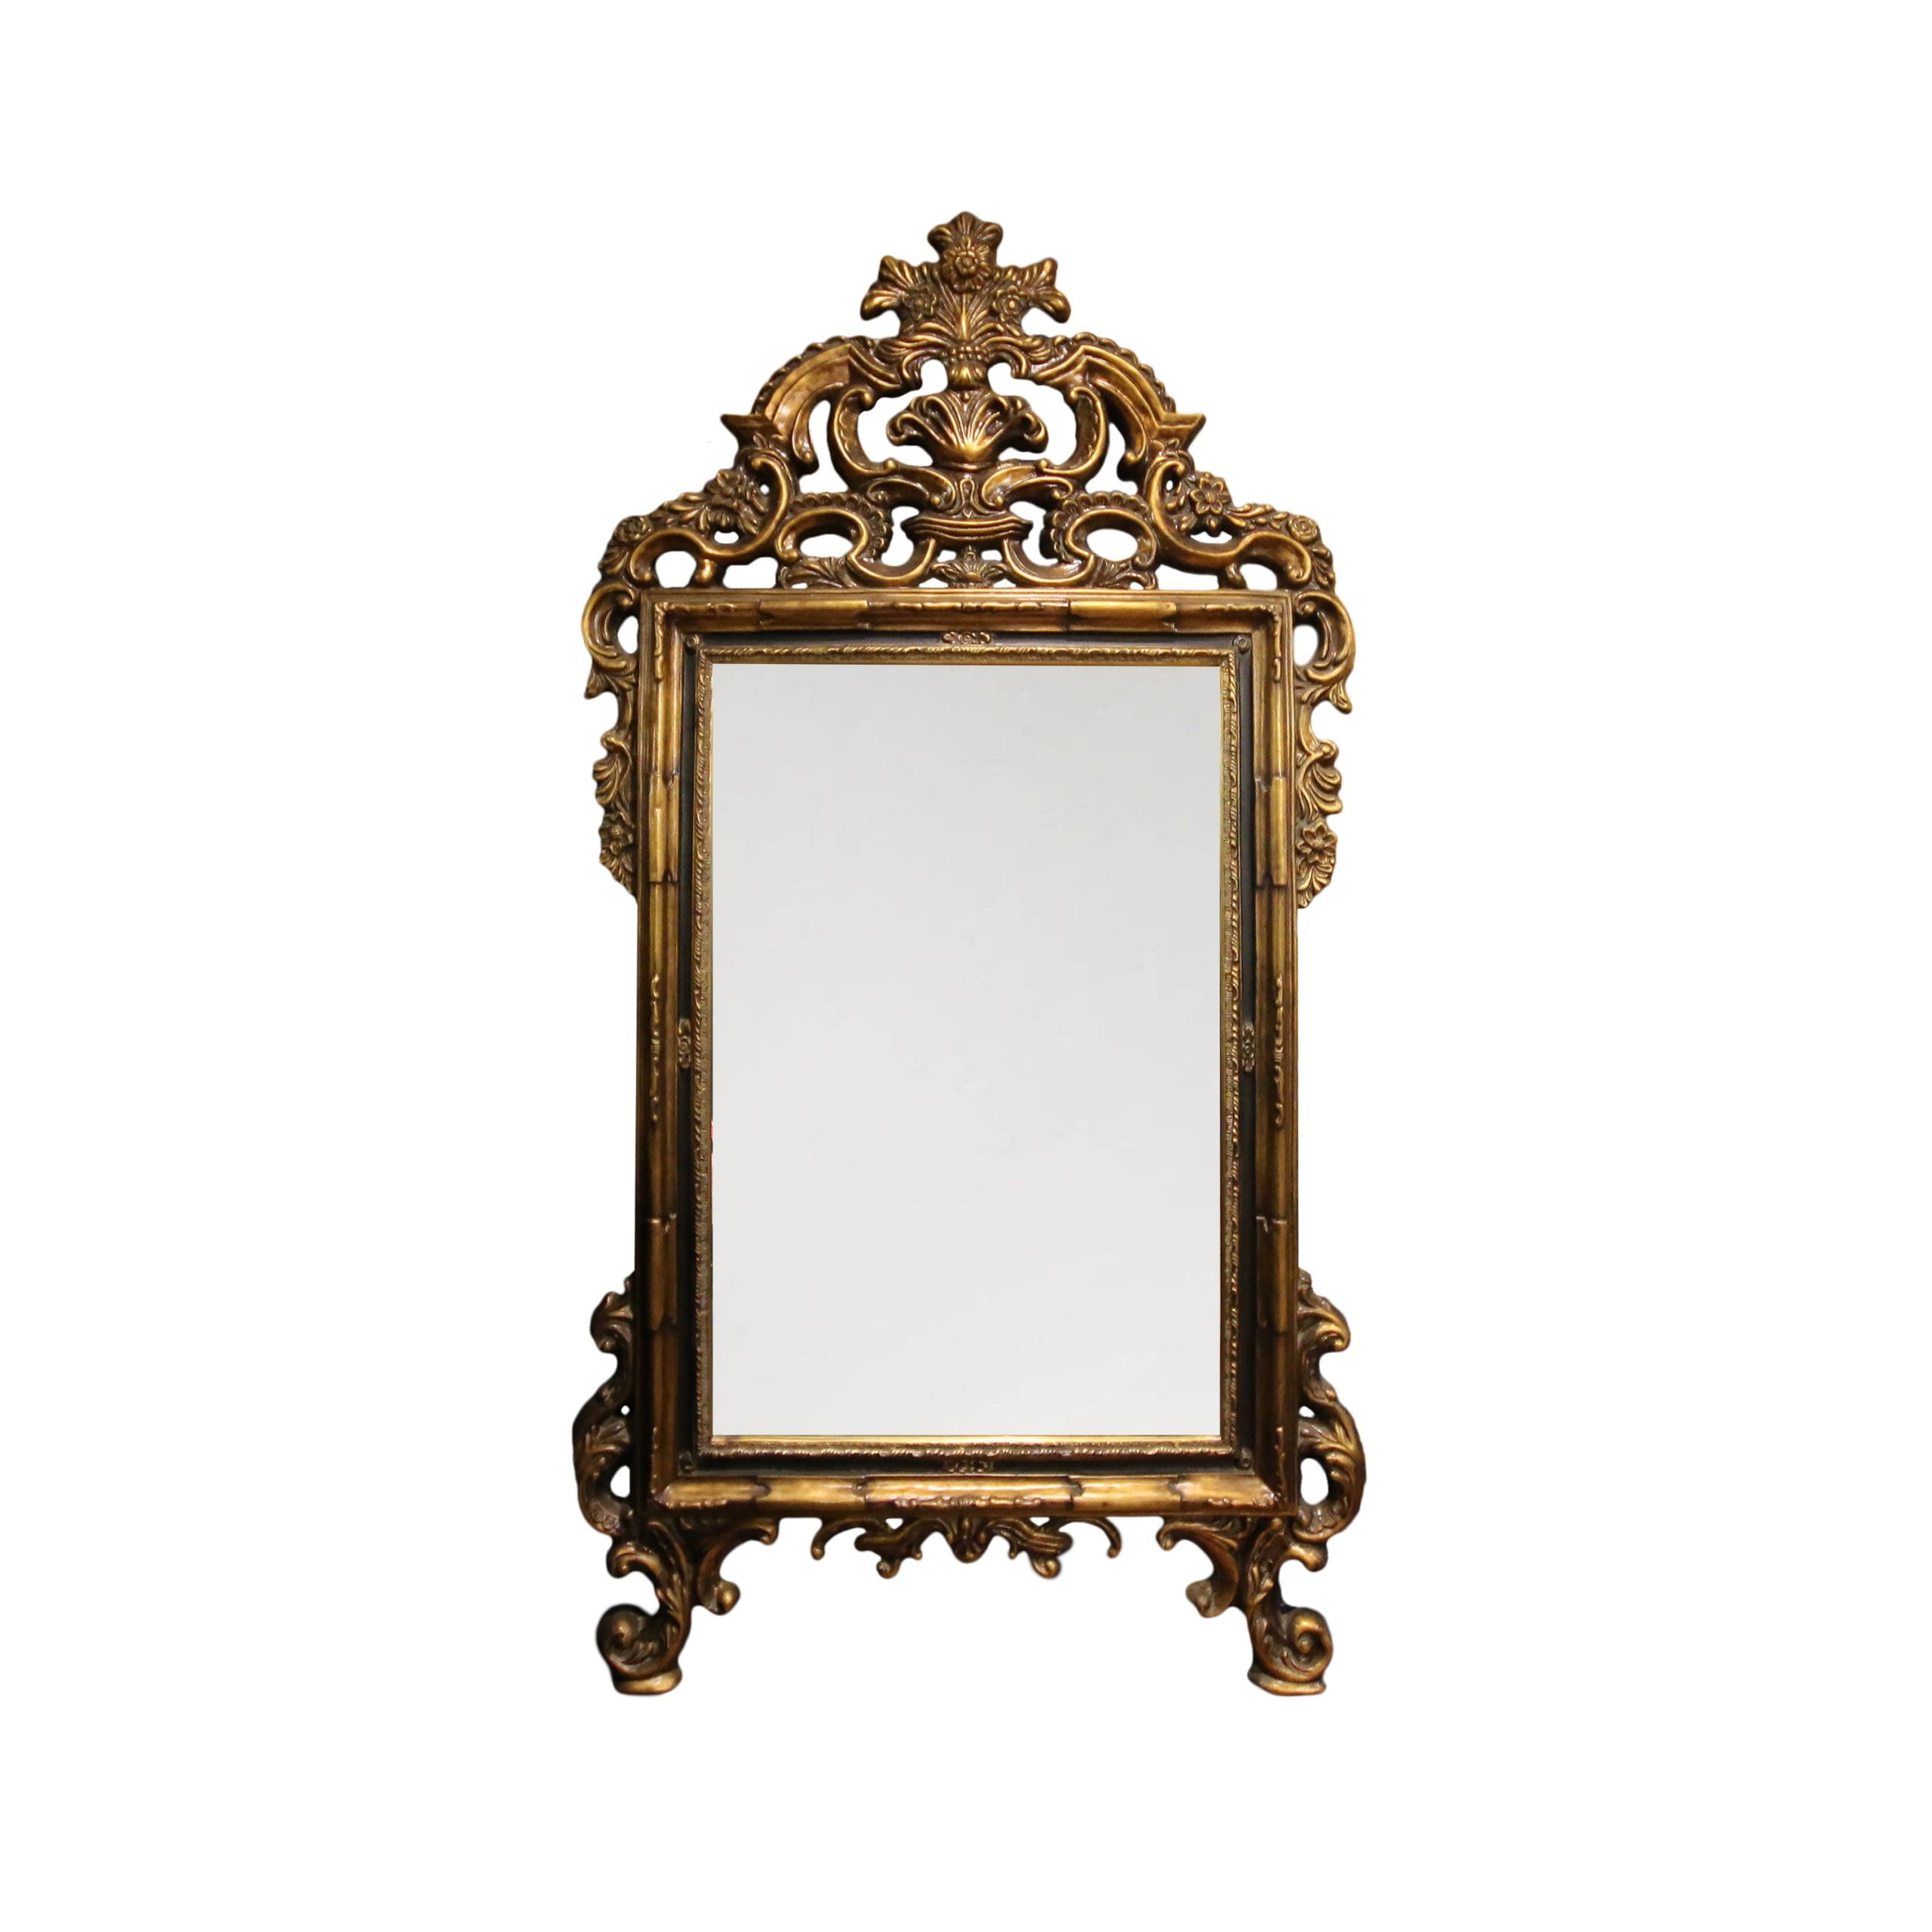 Decorative gold santorini mirror